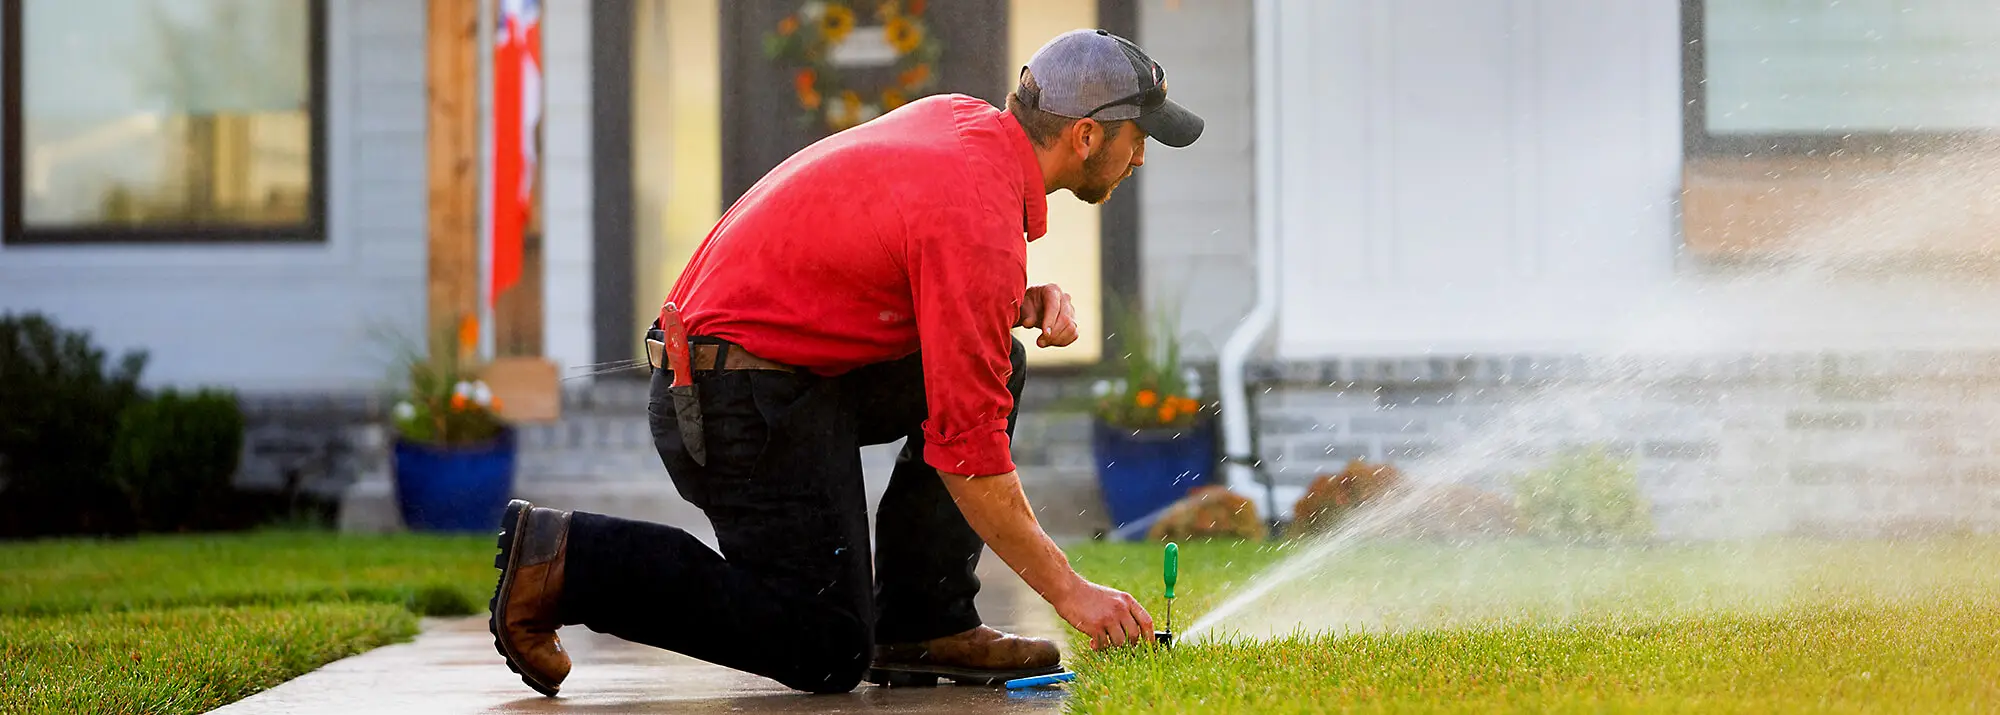 Sprinkler Tech Adjusting Watering Distance on Lawn